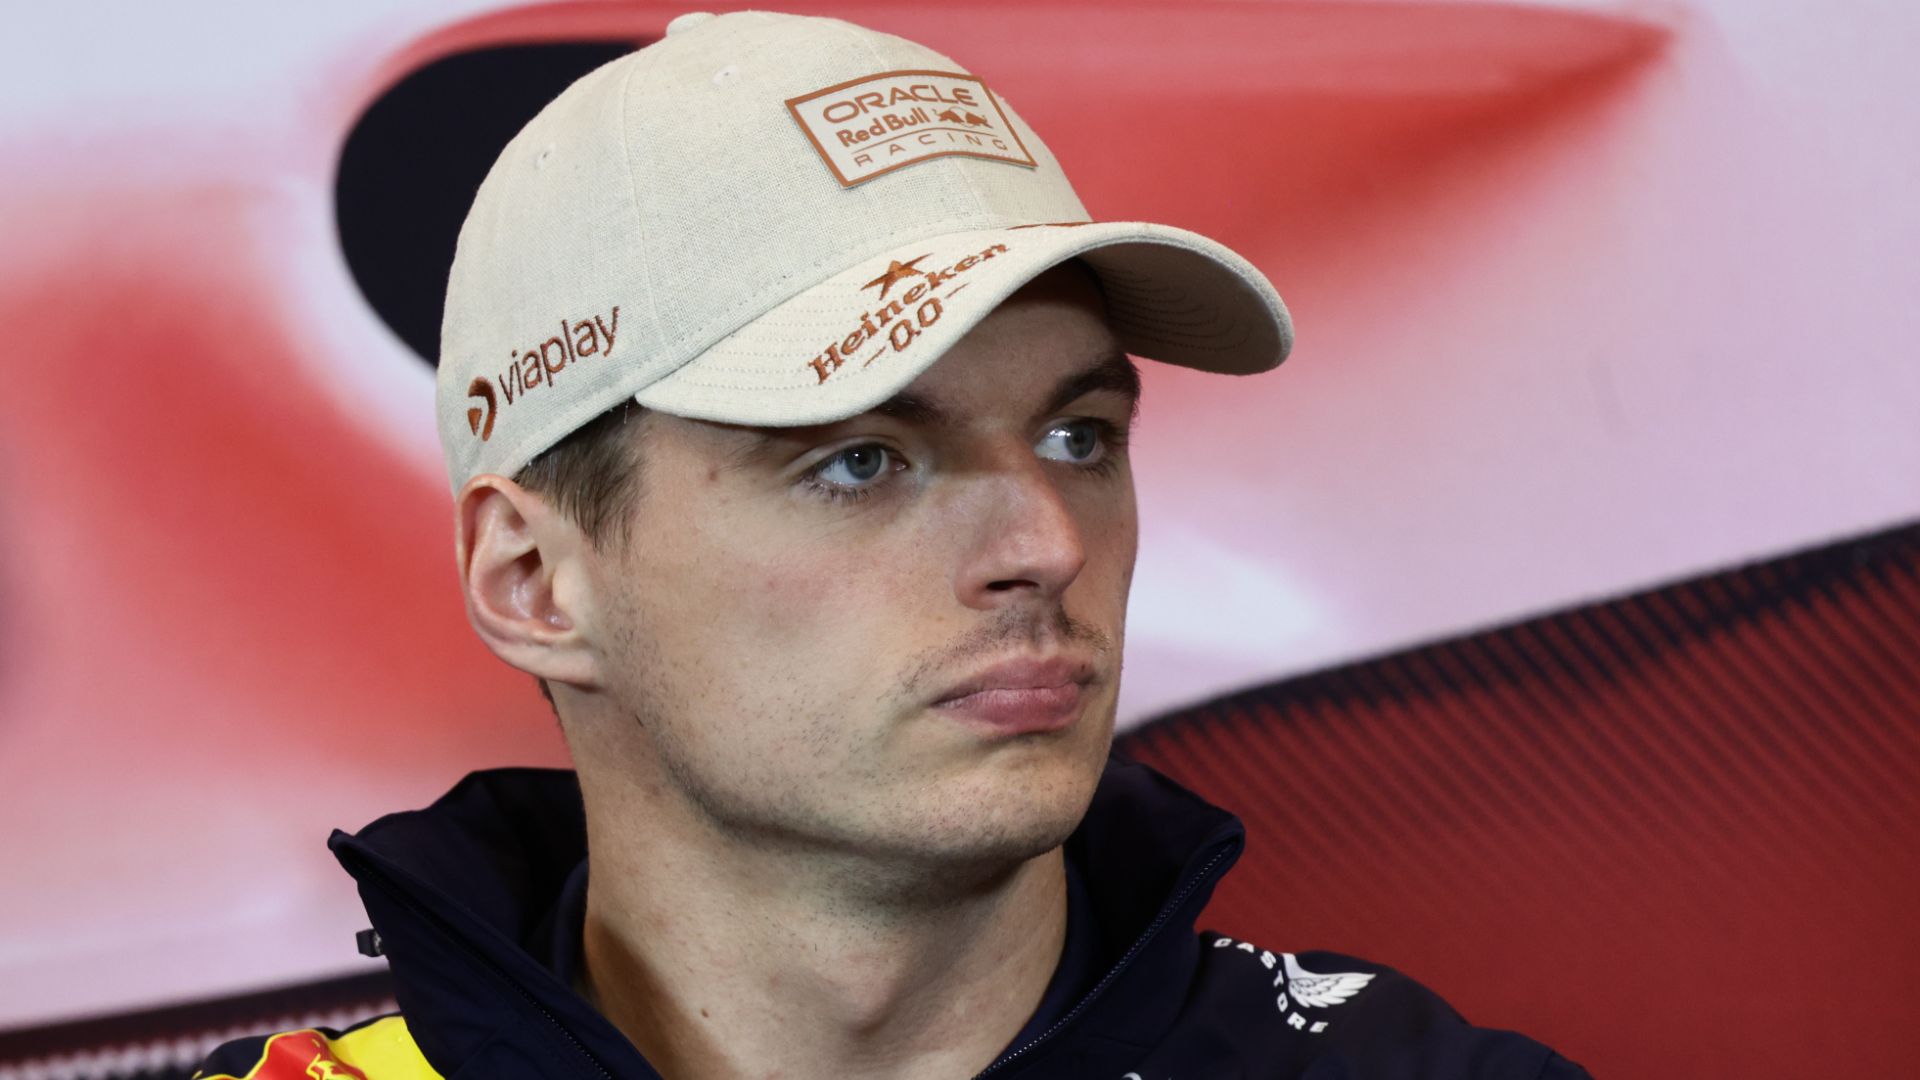 Verstappen expects tough Monaco GP